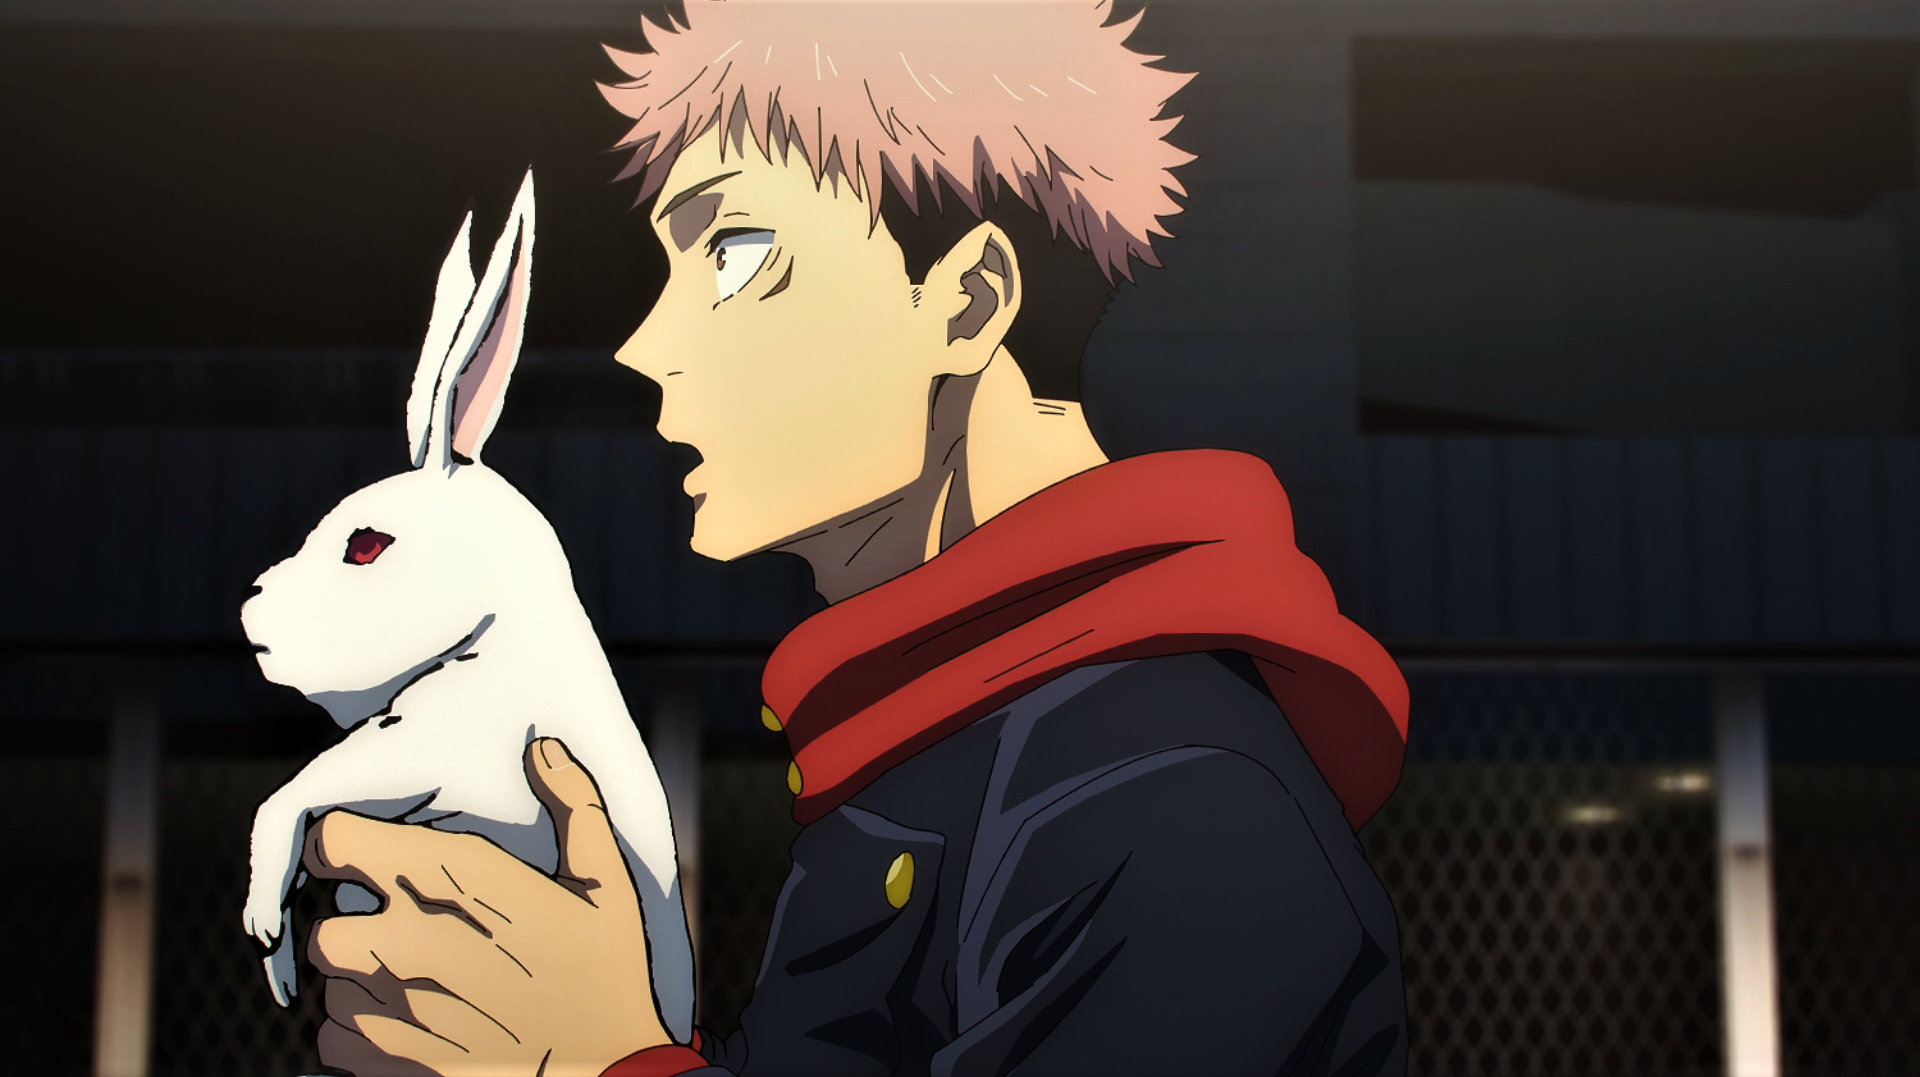 Anime 1920x1077 Jujutsu Kaisen rabbits bunny ears red eyes open mouth pink hair undercut (hairstyle) hoods uniform anime anime screenshot anime boys animals